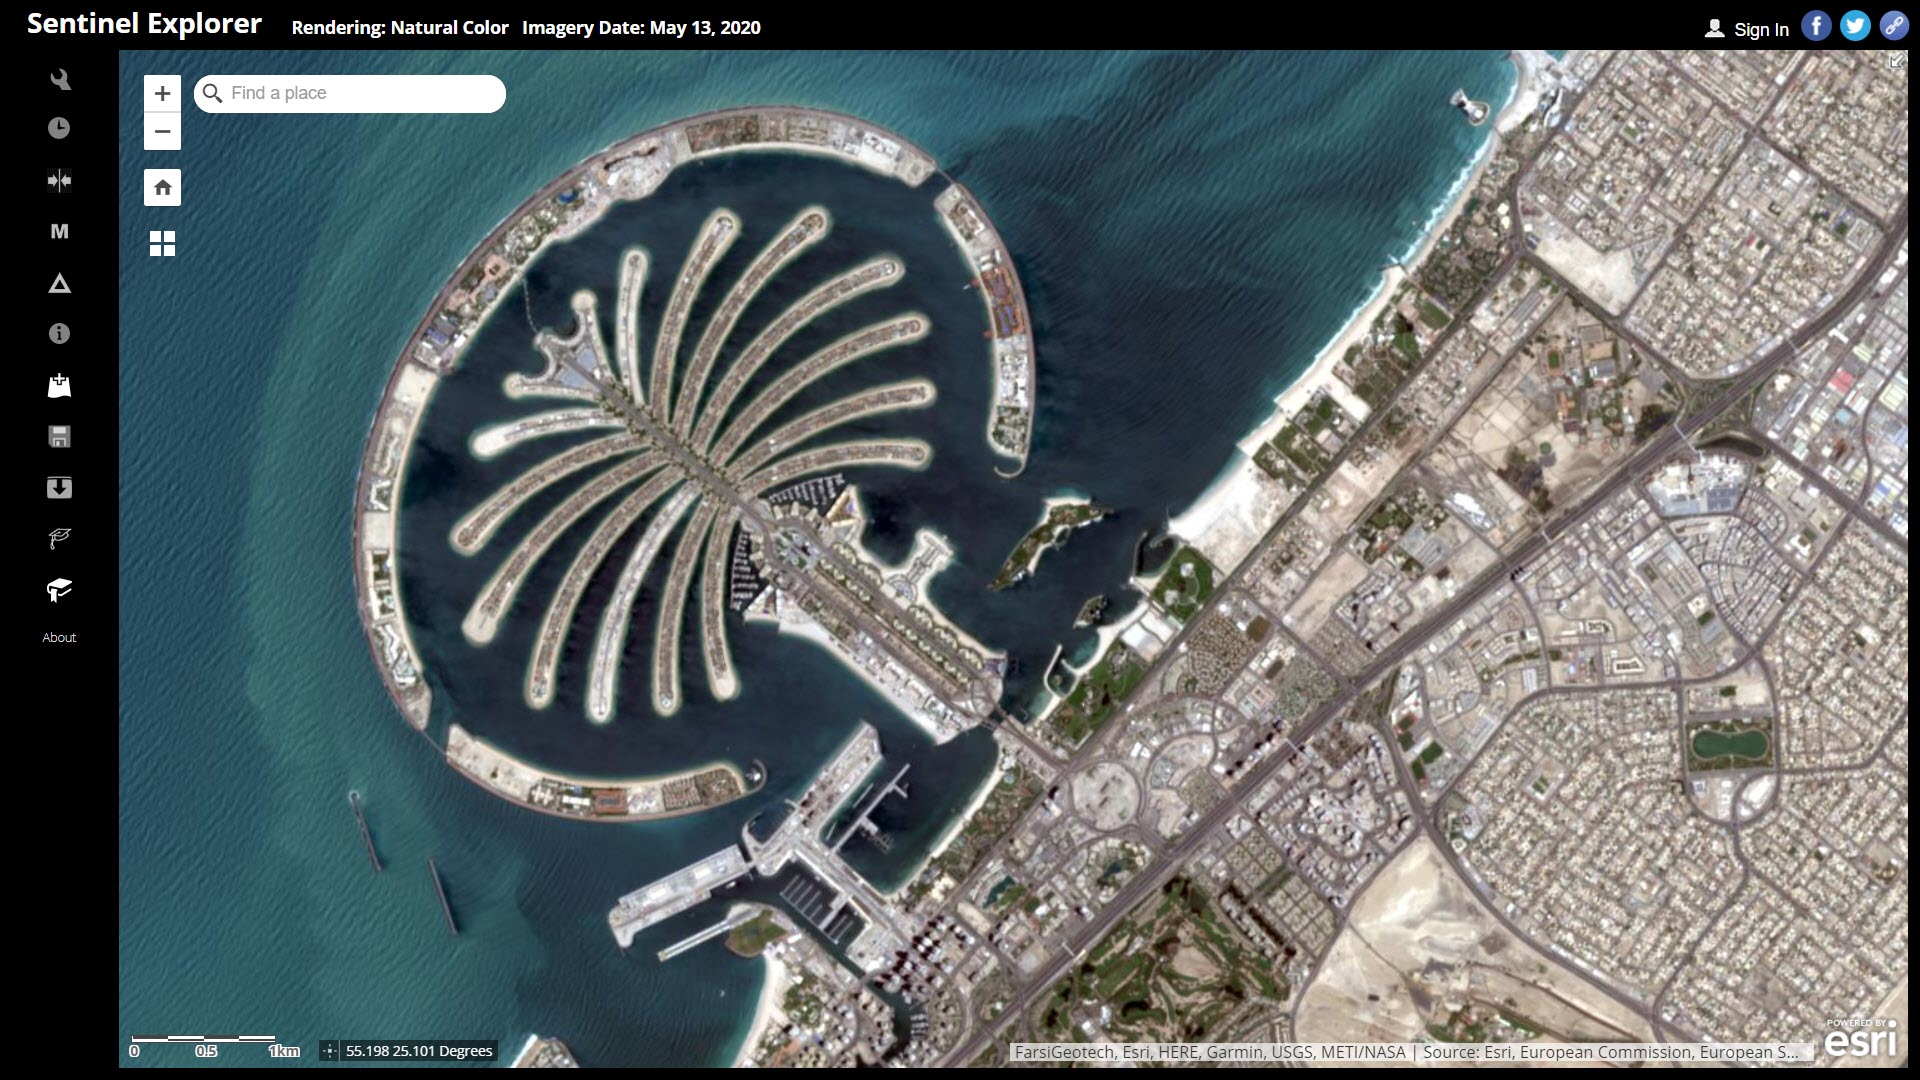 Satellite image of Dubai, captured by sentinel-2.